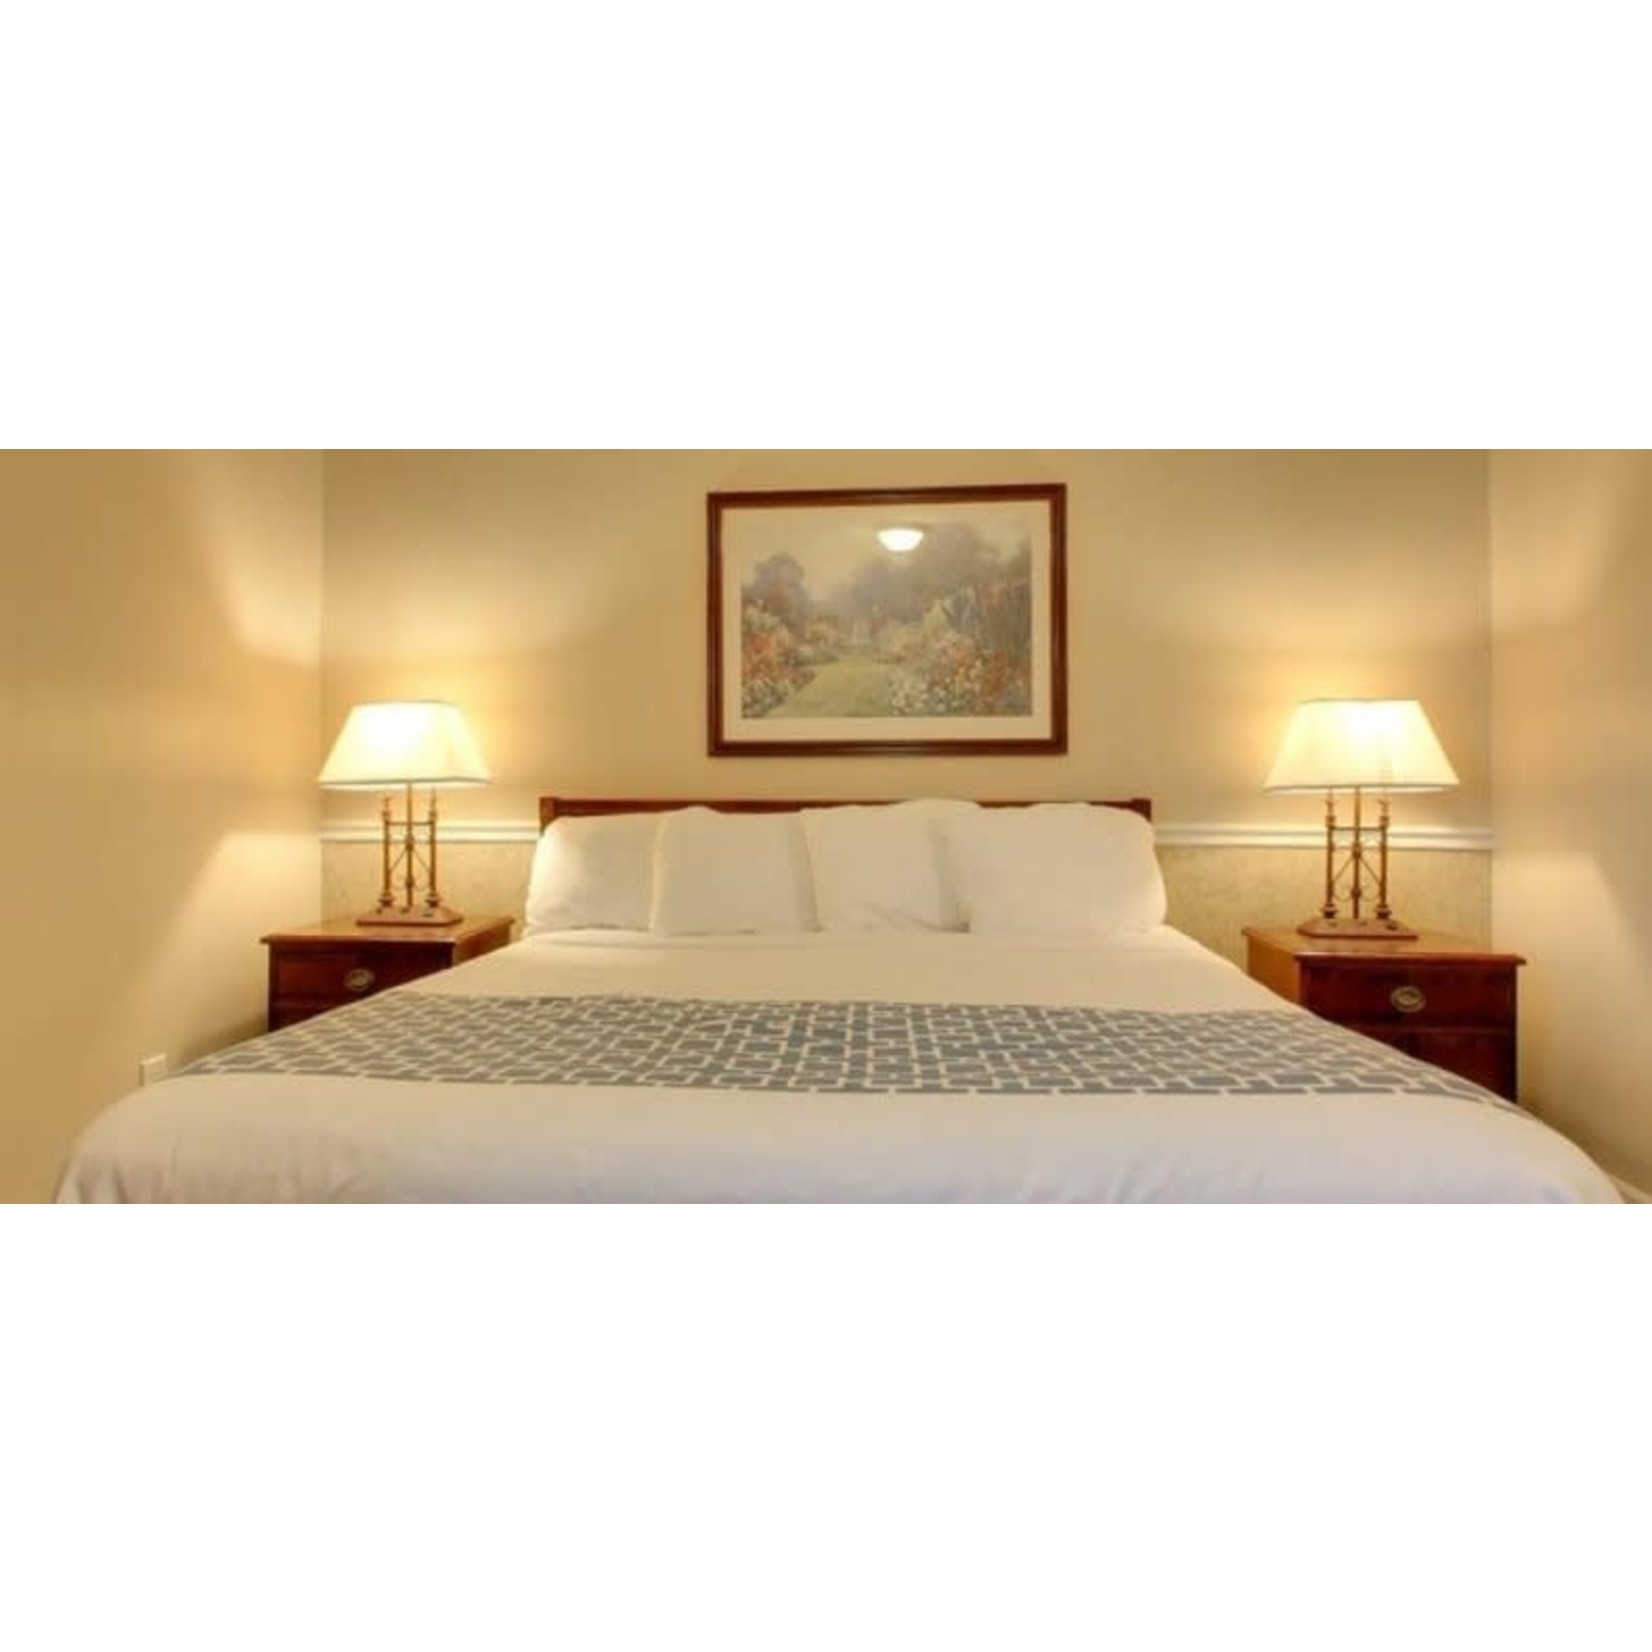 IL-Alpine Inn & Suites-Rockford IL-Alpine Inn & Suites-Rockford $85.44 (1) Night Stay